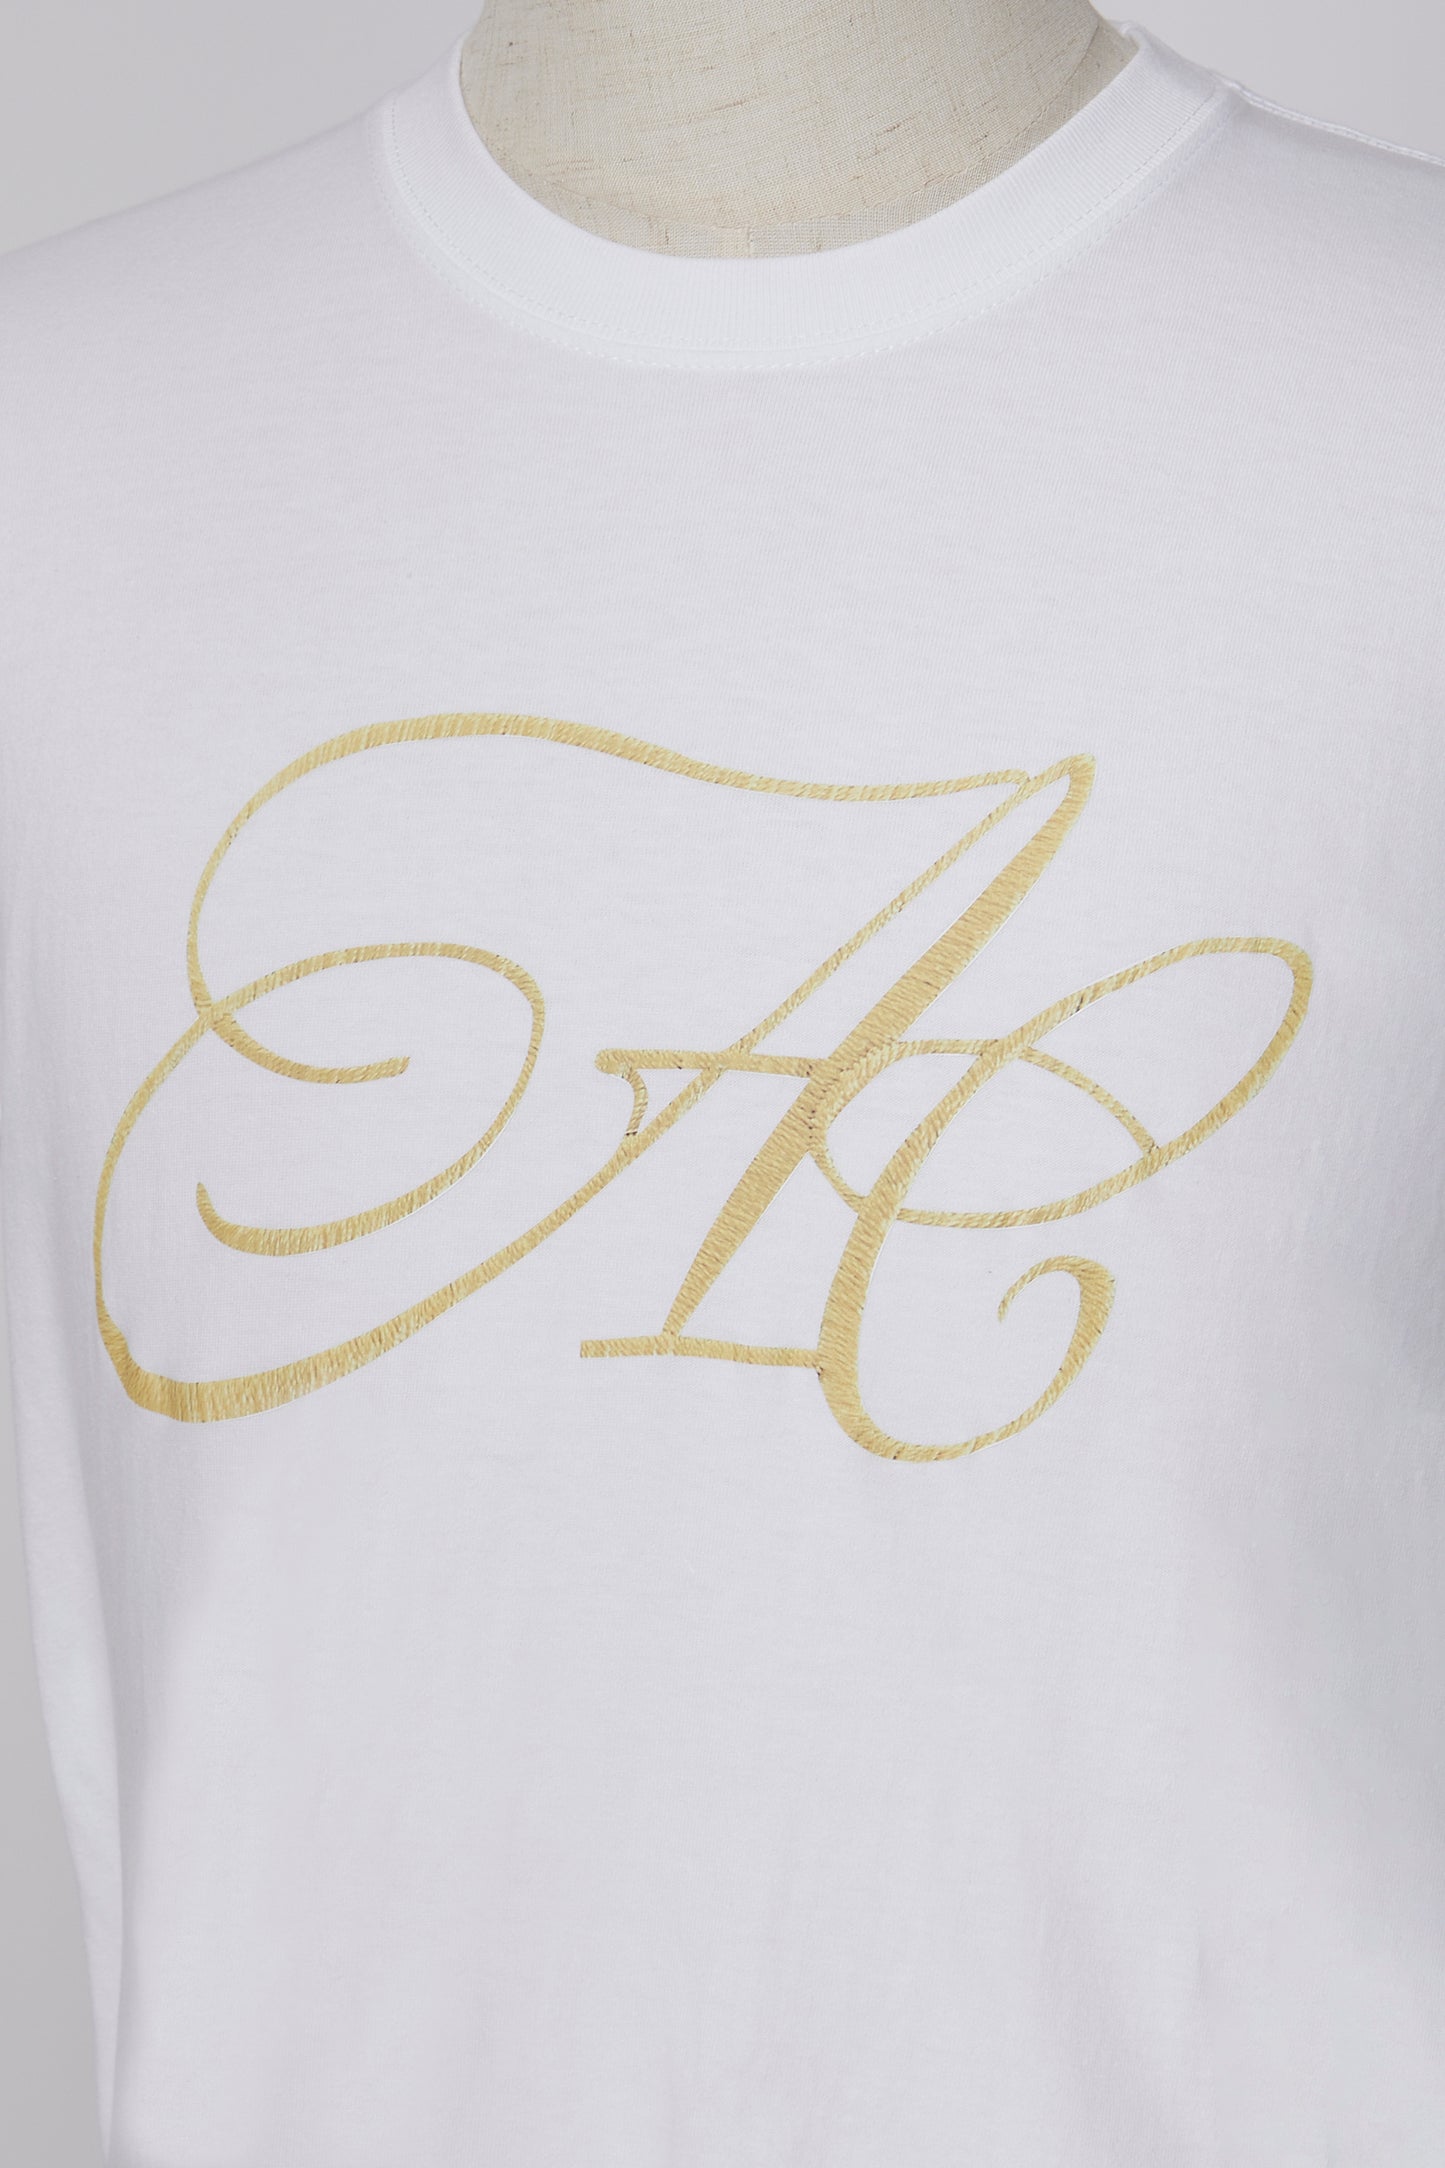 WatashiMade Original Goods [Arisa company] AC logo print T-shirt